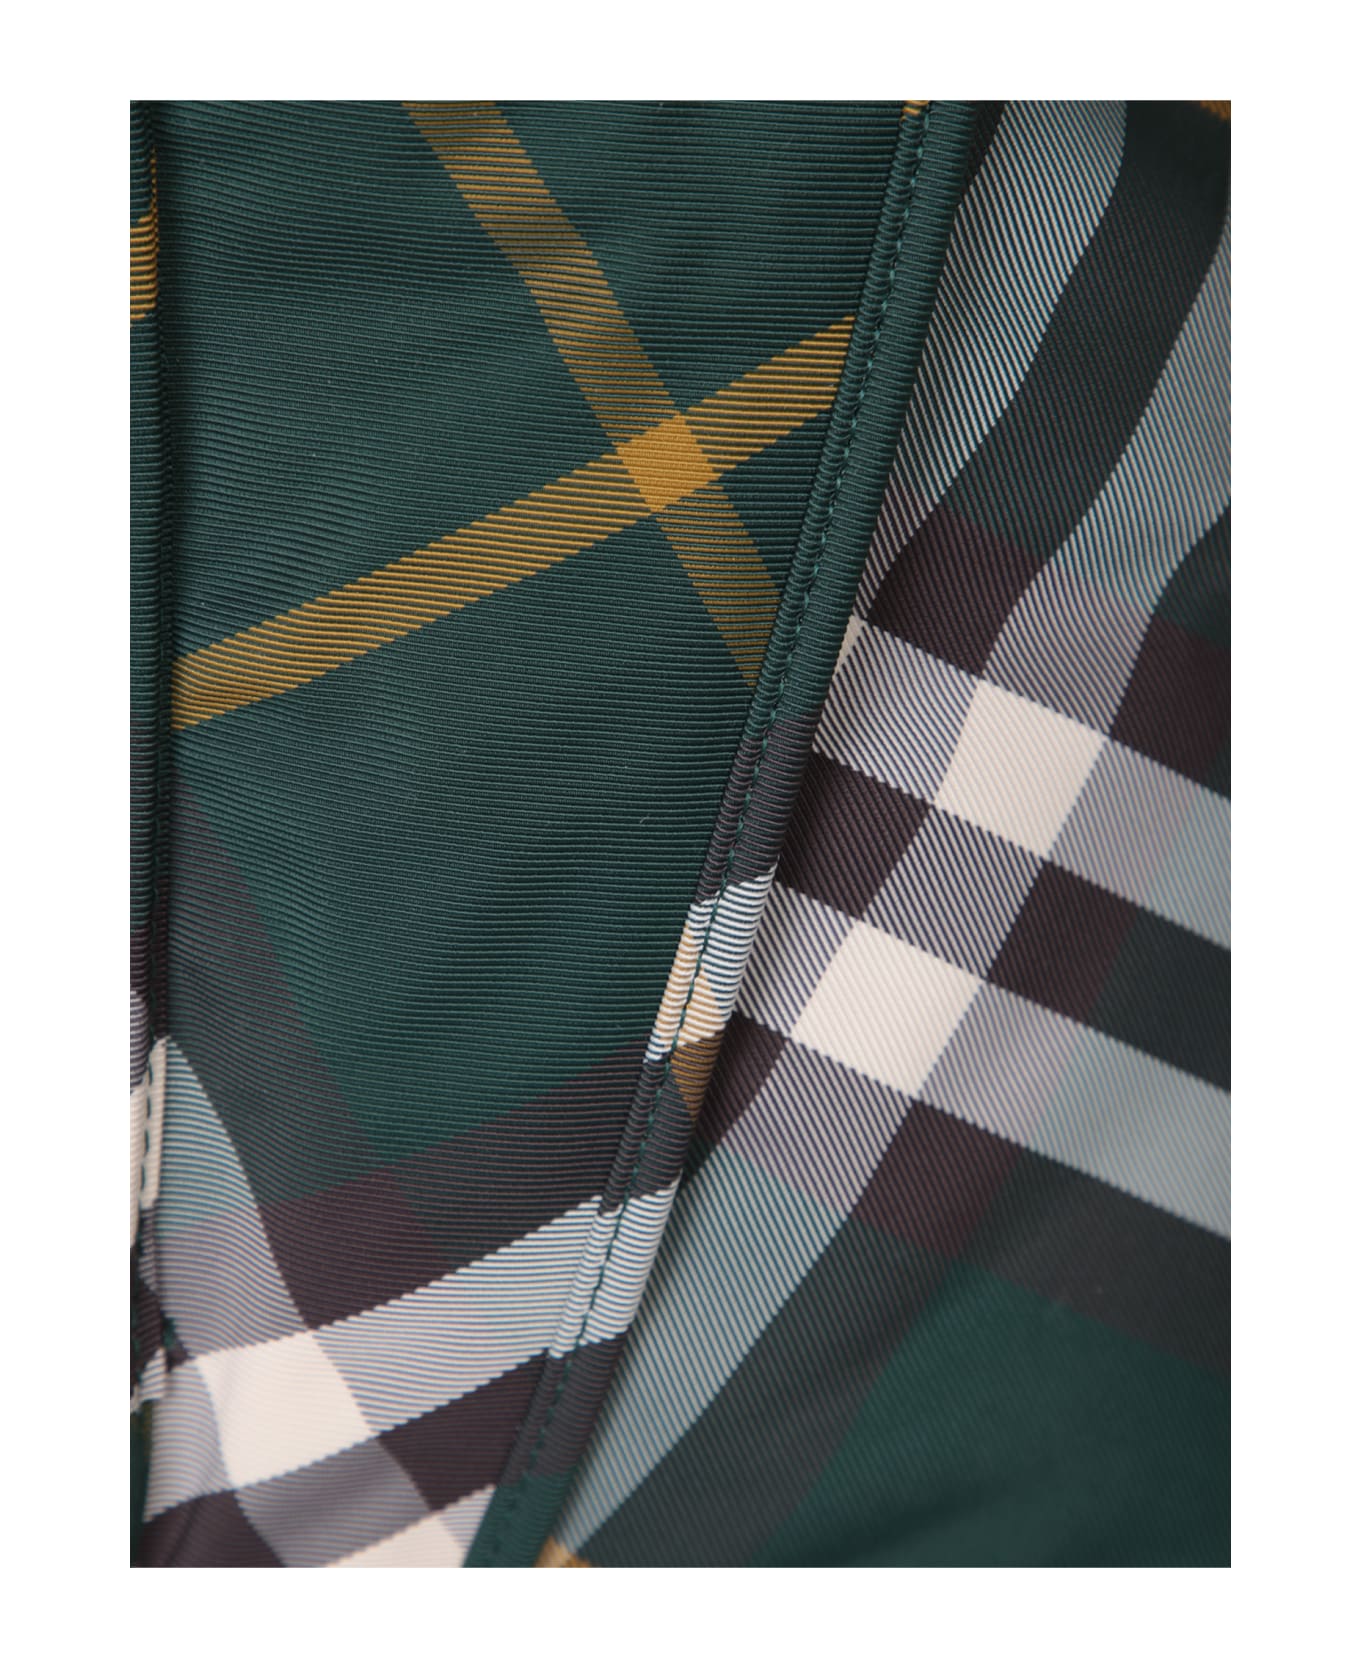 Burberry Backpack - Green